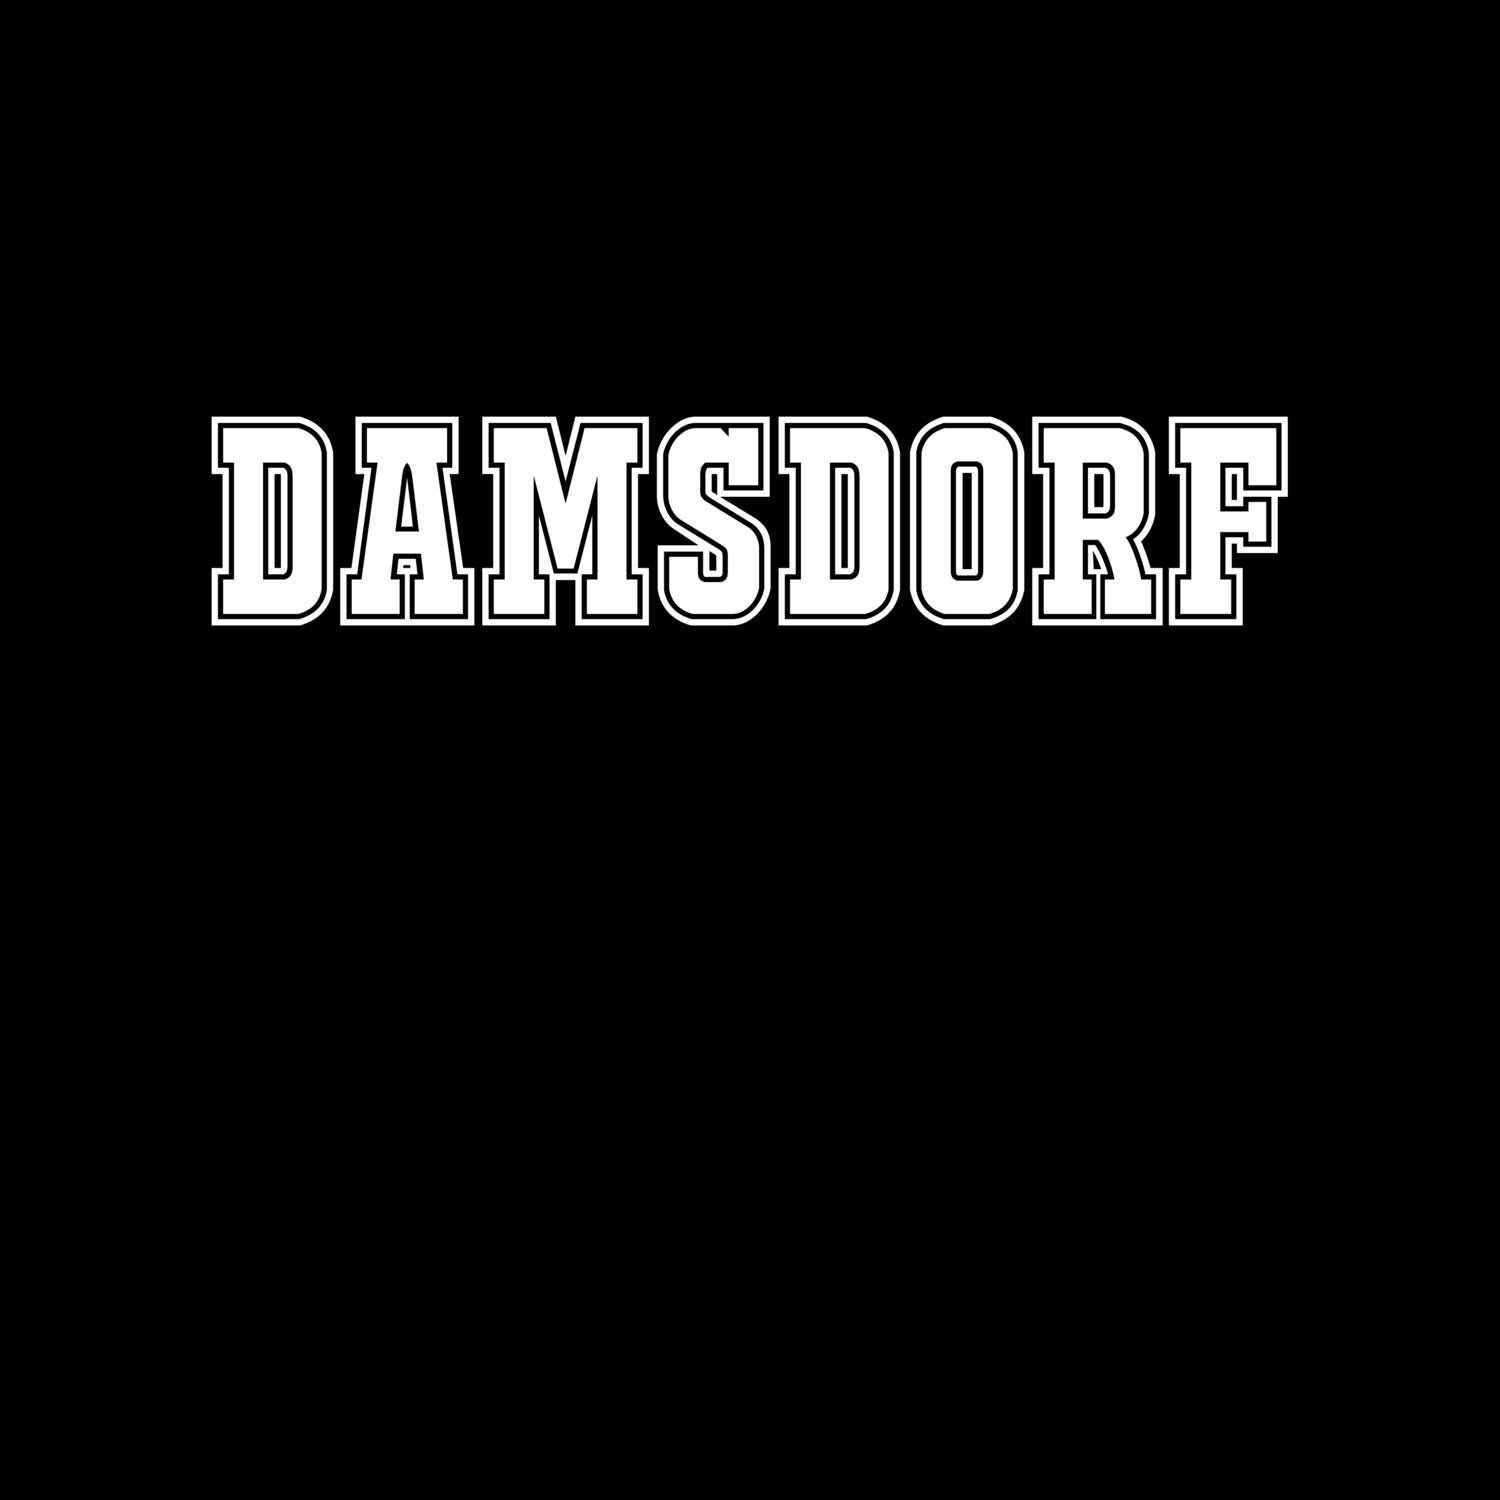 Damsdorf T-Shirt »Classic«